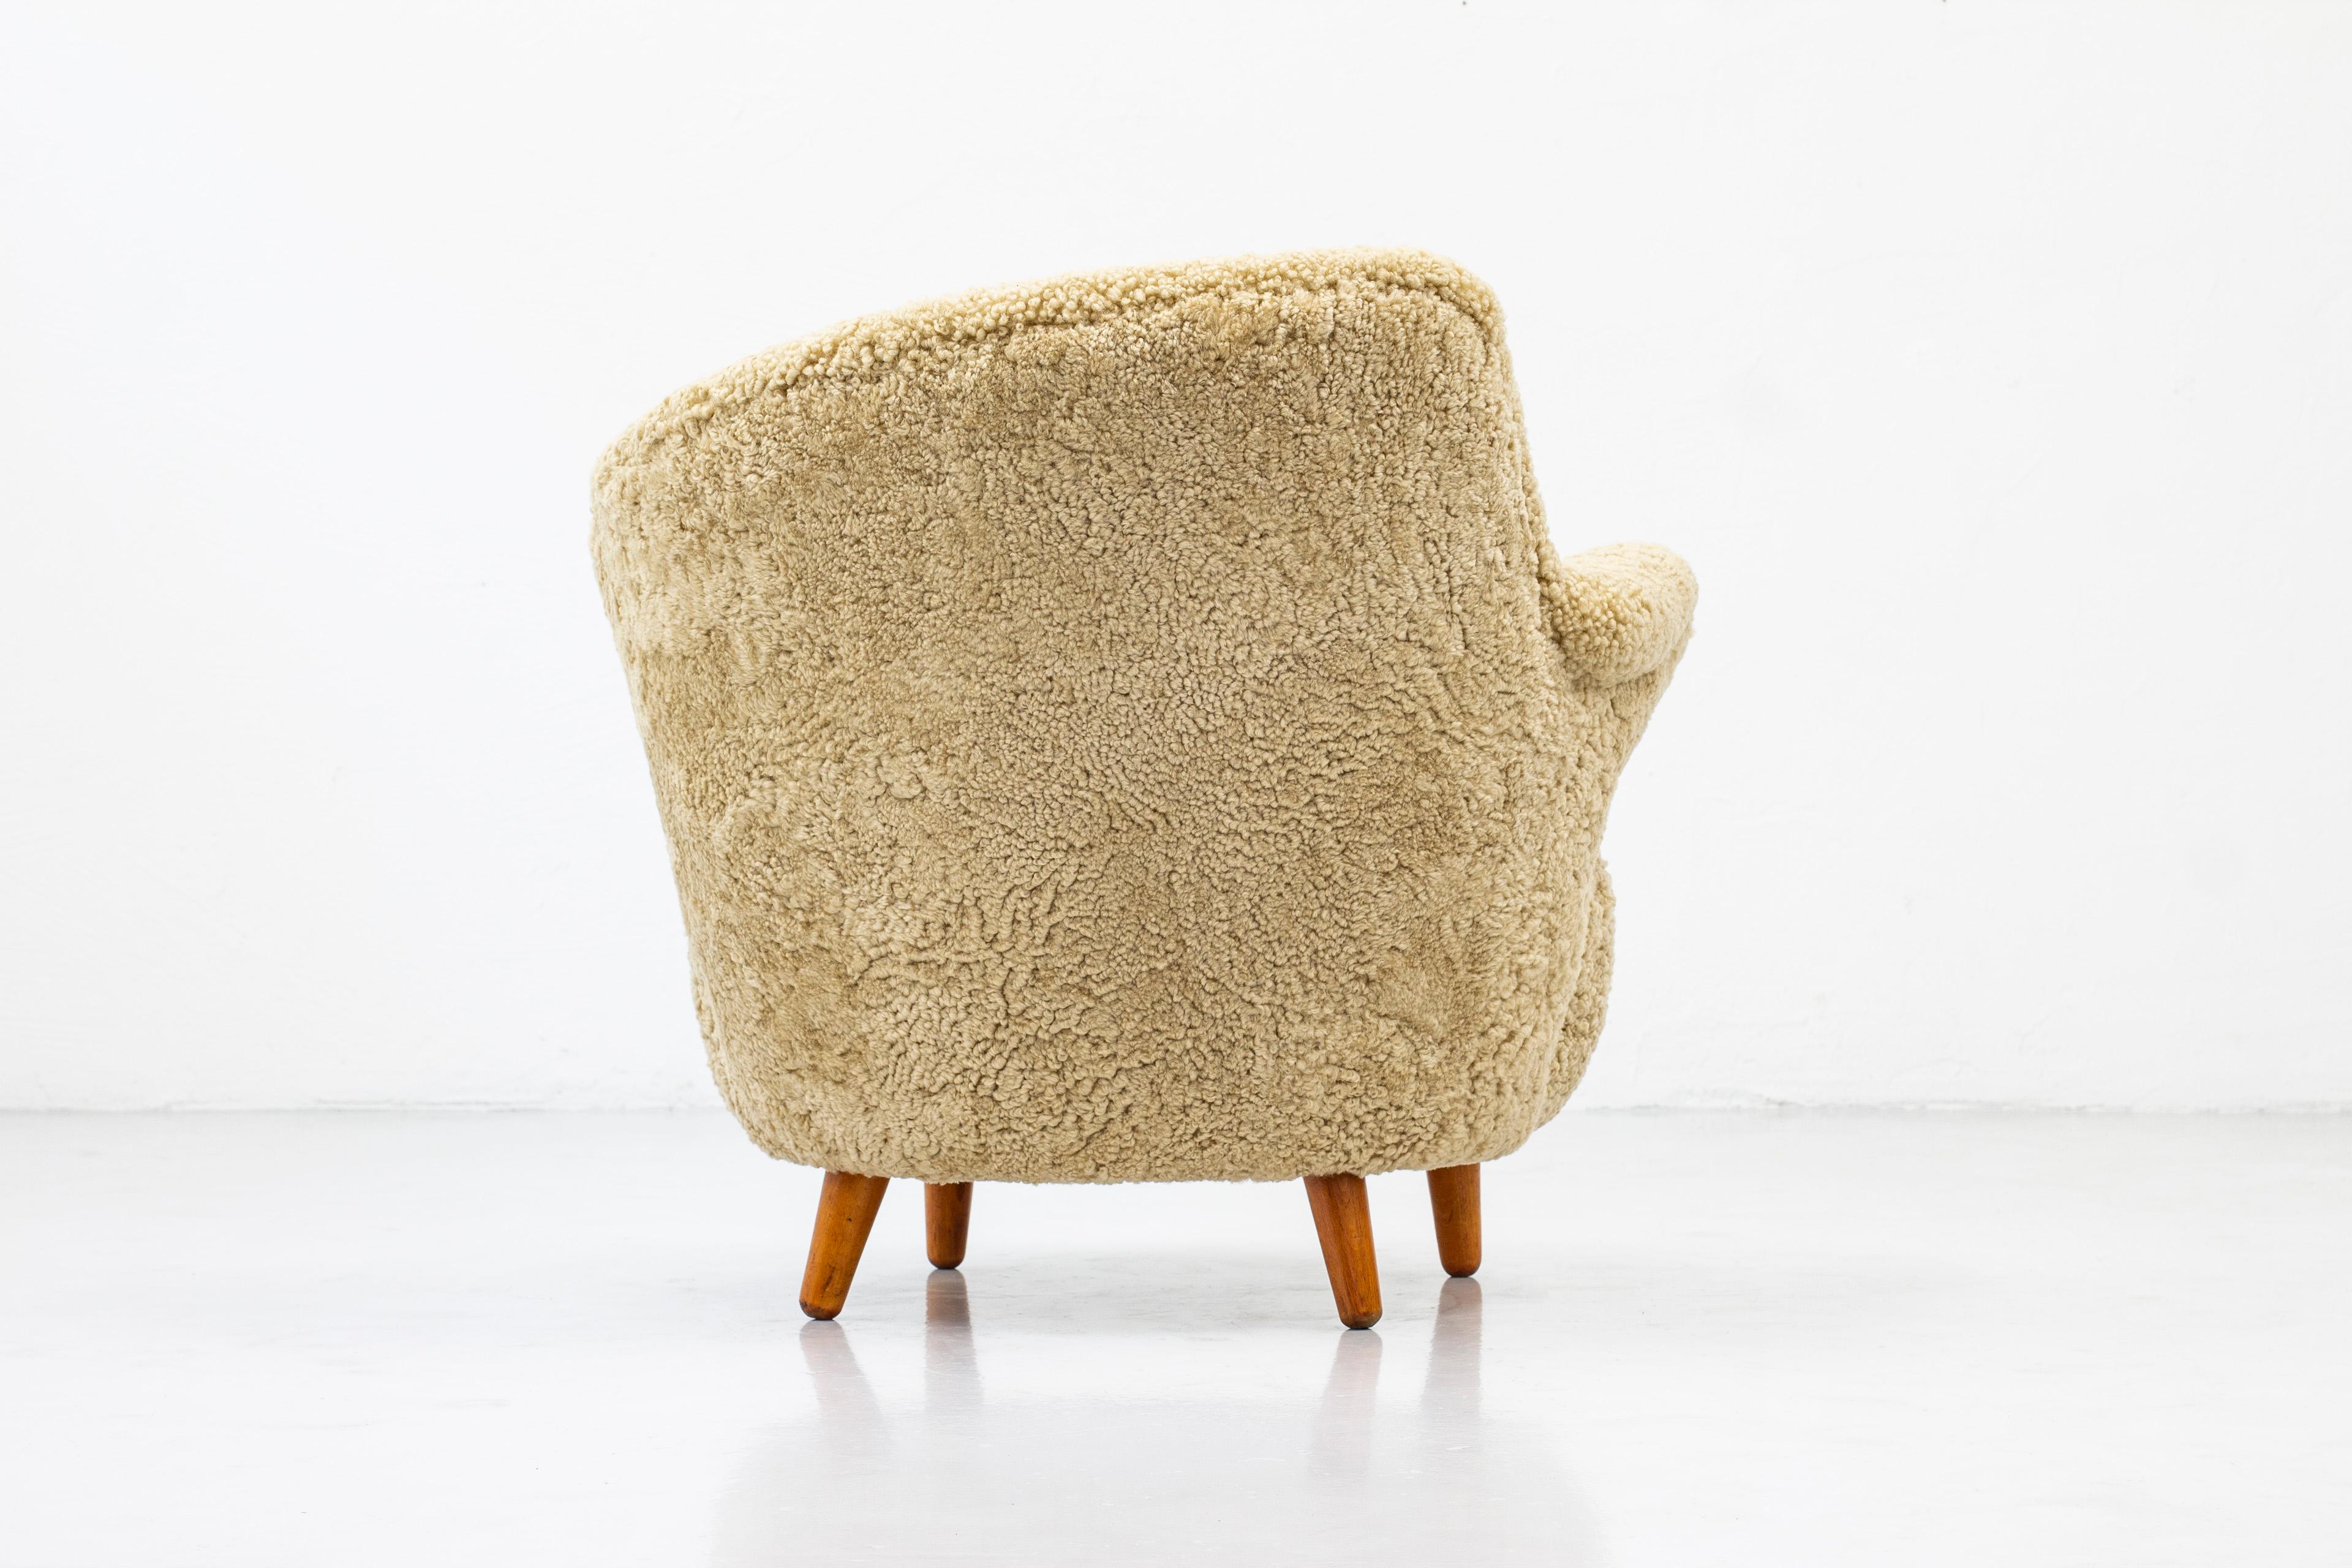 Norwegian Asymmetrical Lounge Chair in Sheep Skin by Vik & Blindheim